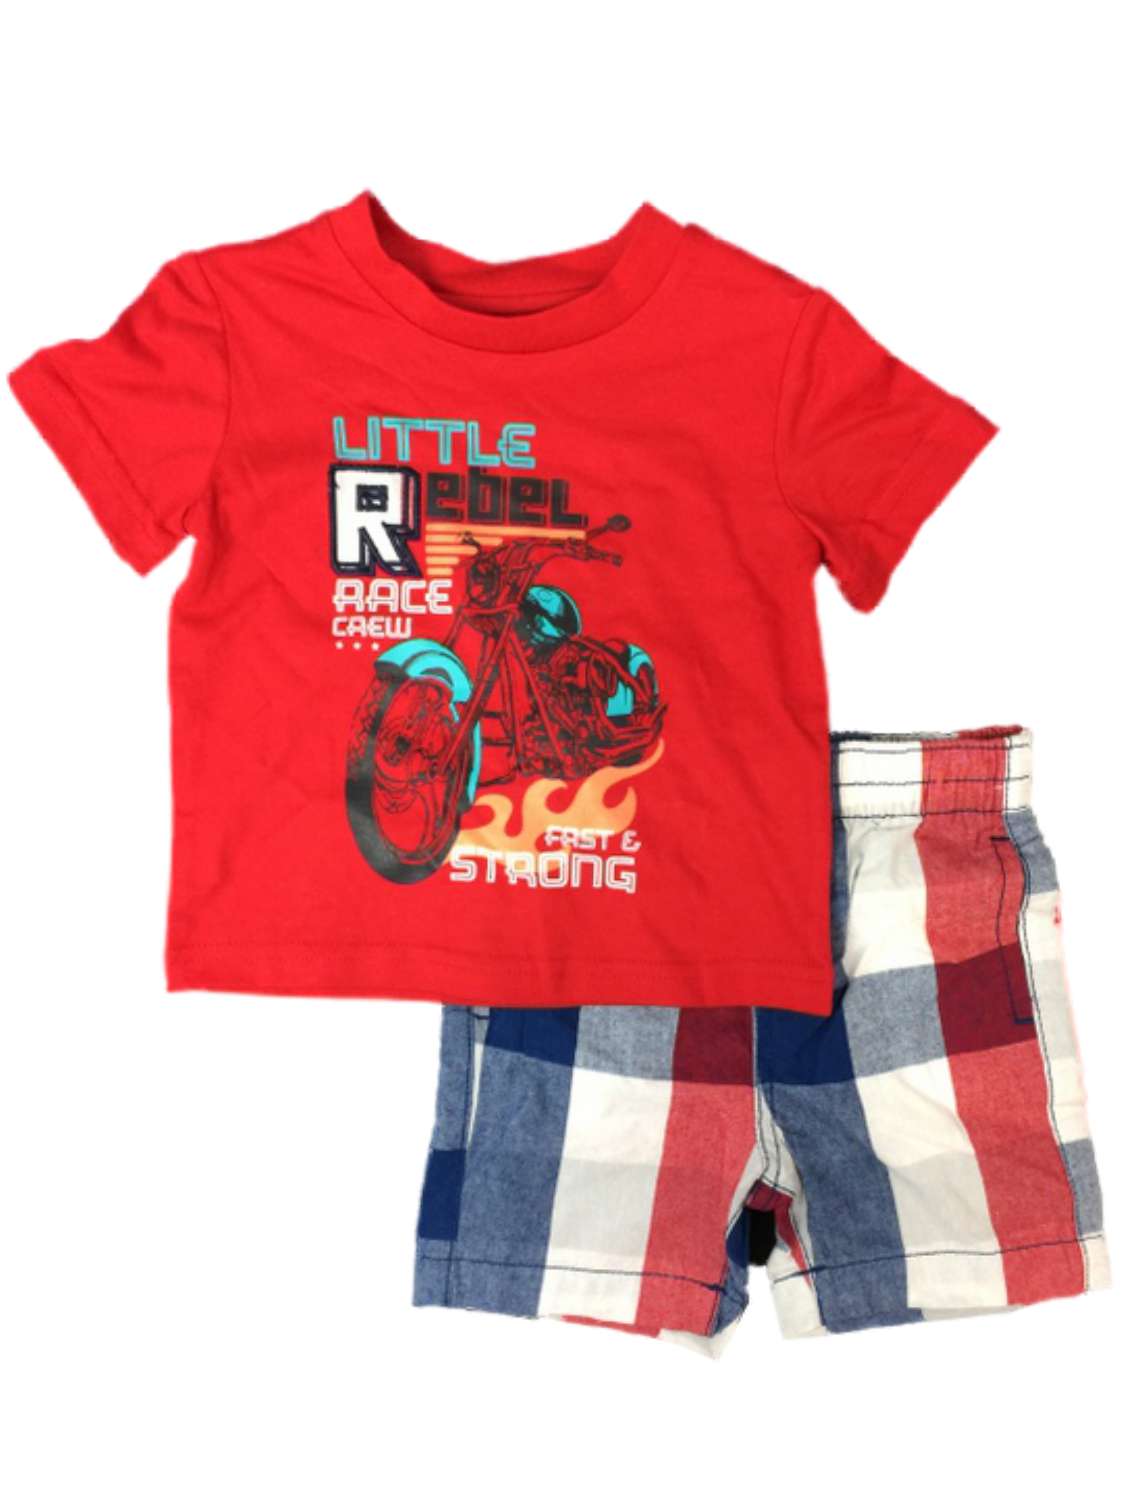 Toughskins Infant Boys Little Rebel Outfit Motorcycle Shirt & Plaid Shorts Set 12